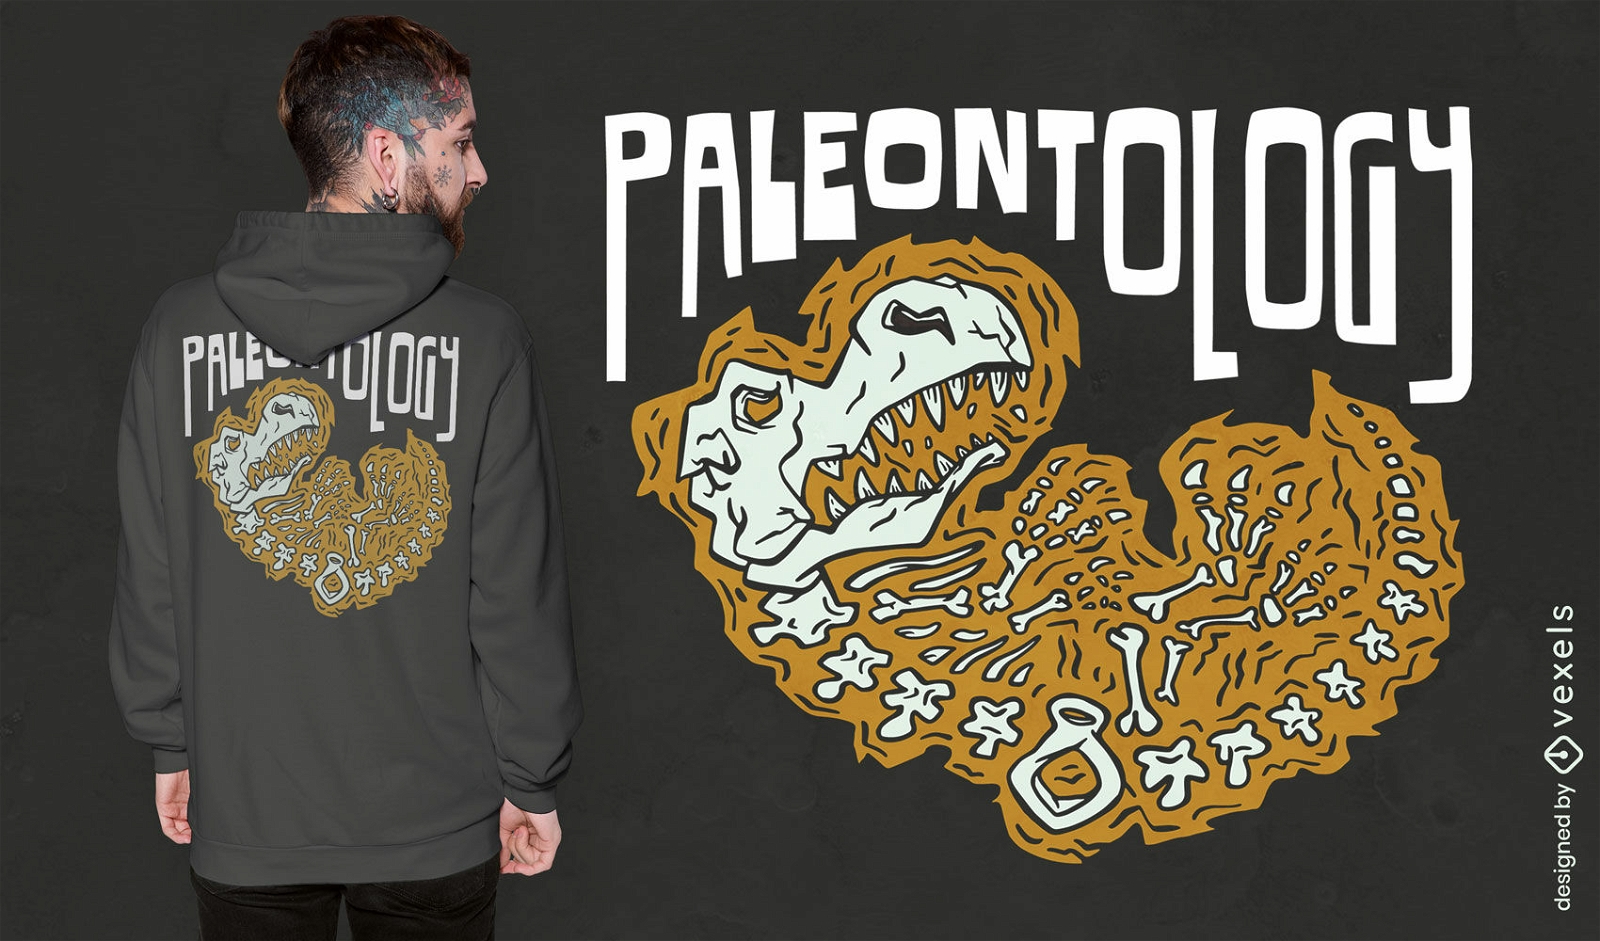 Dinosaur skeleton and bones t-shirt design